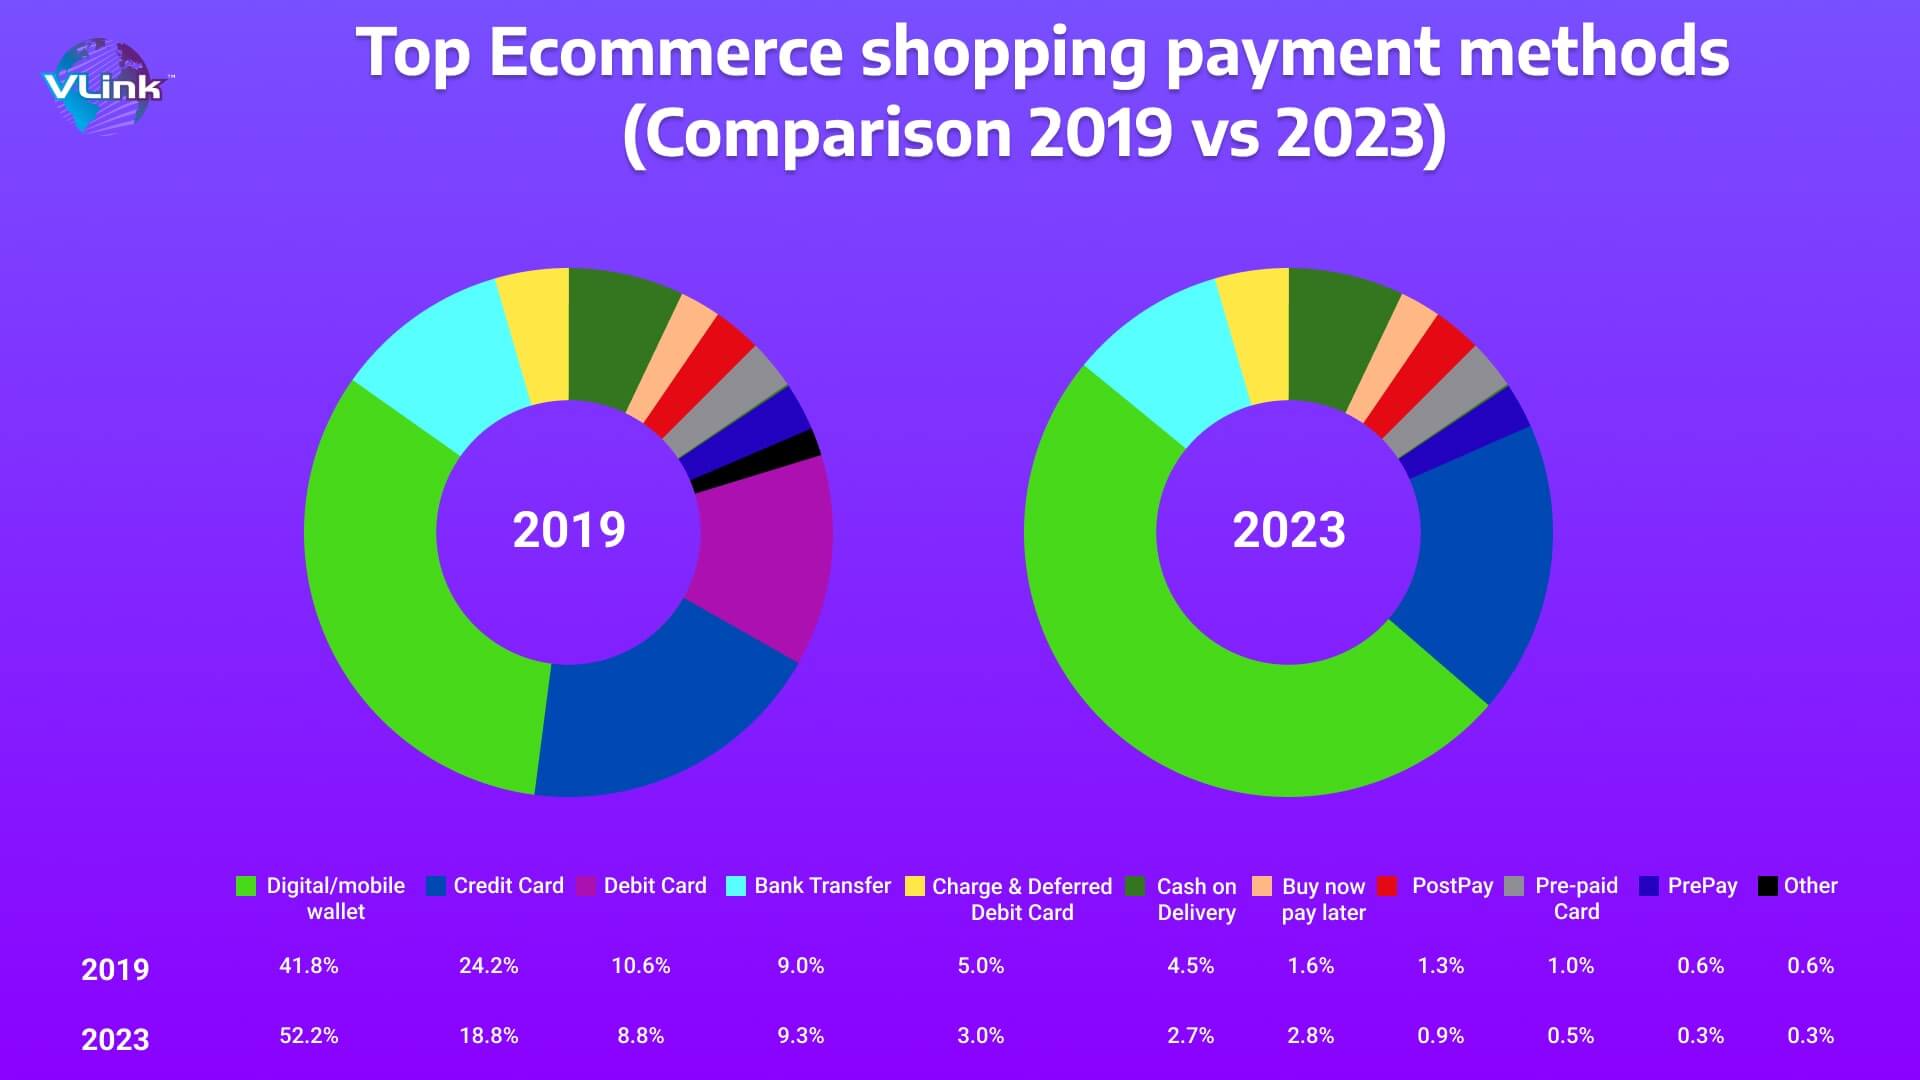 Top Ecommerce shopping payment methods (Comparison 2019 vs 2023)